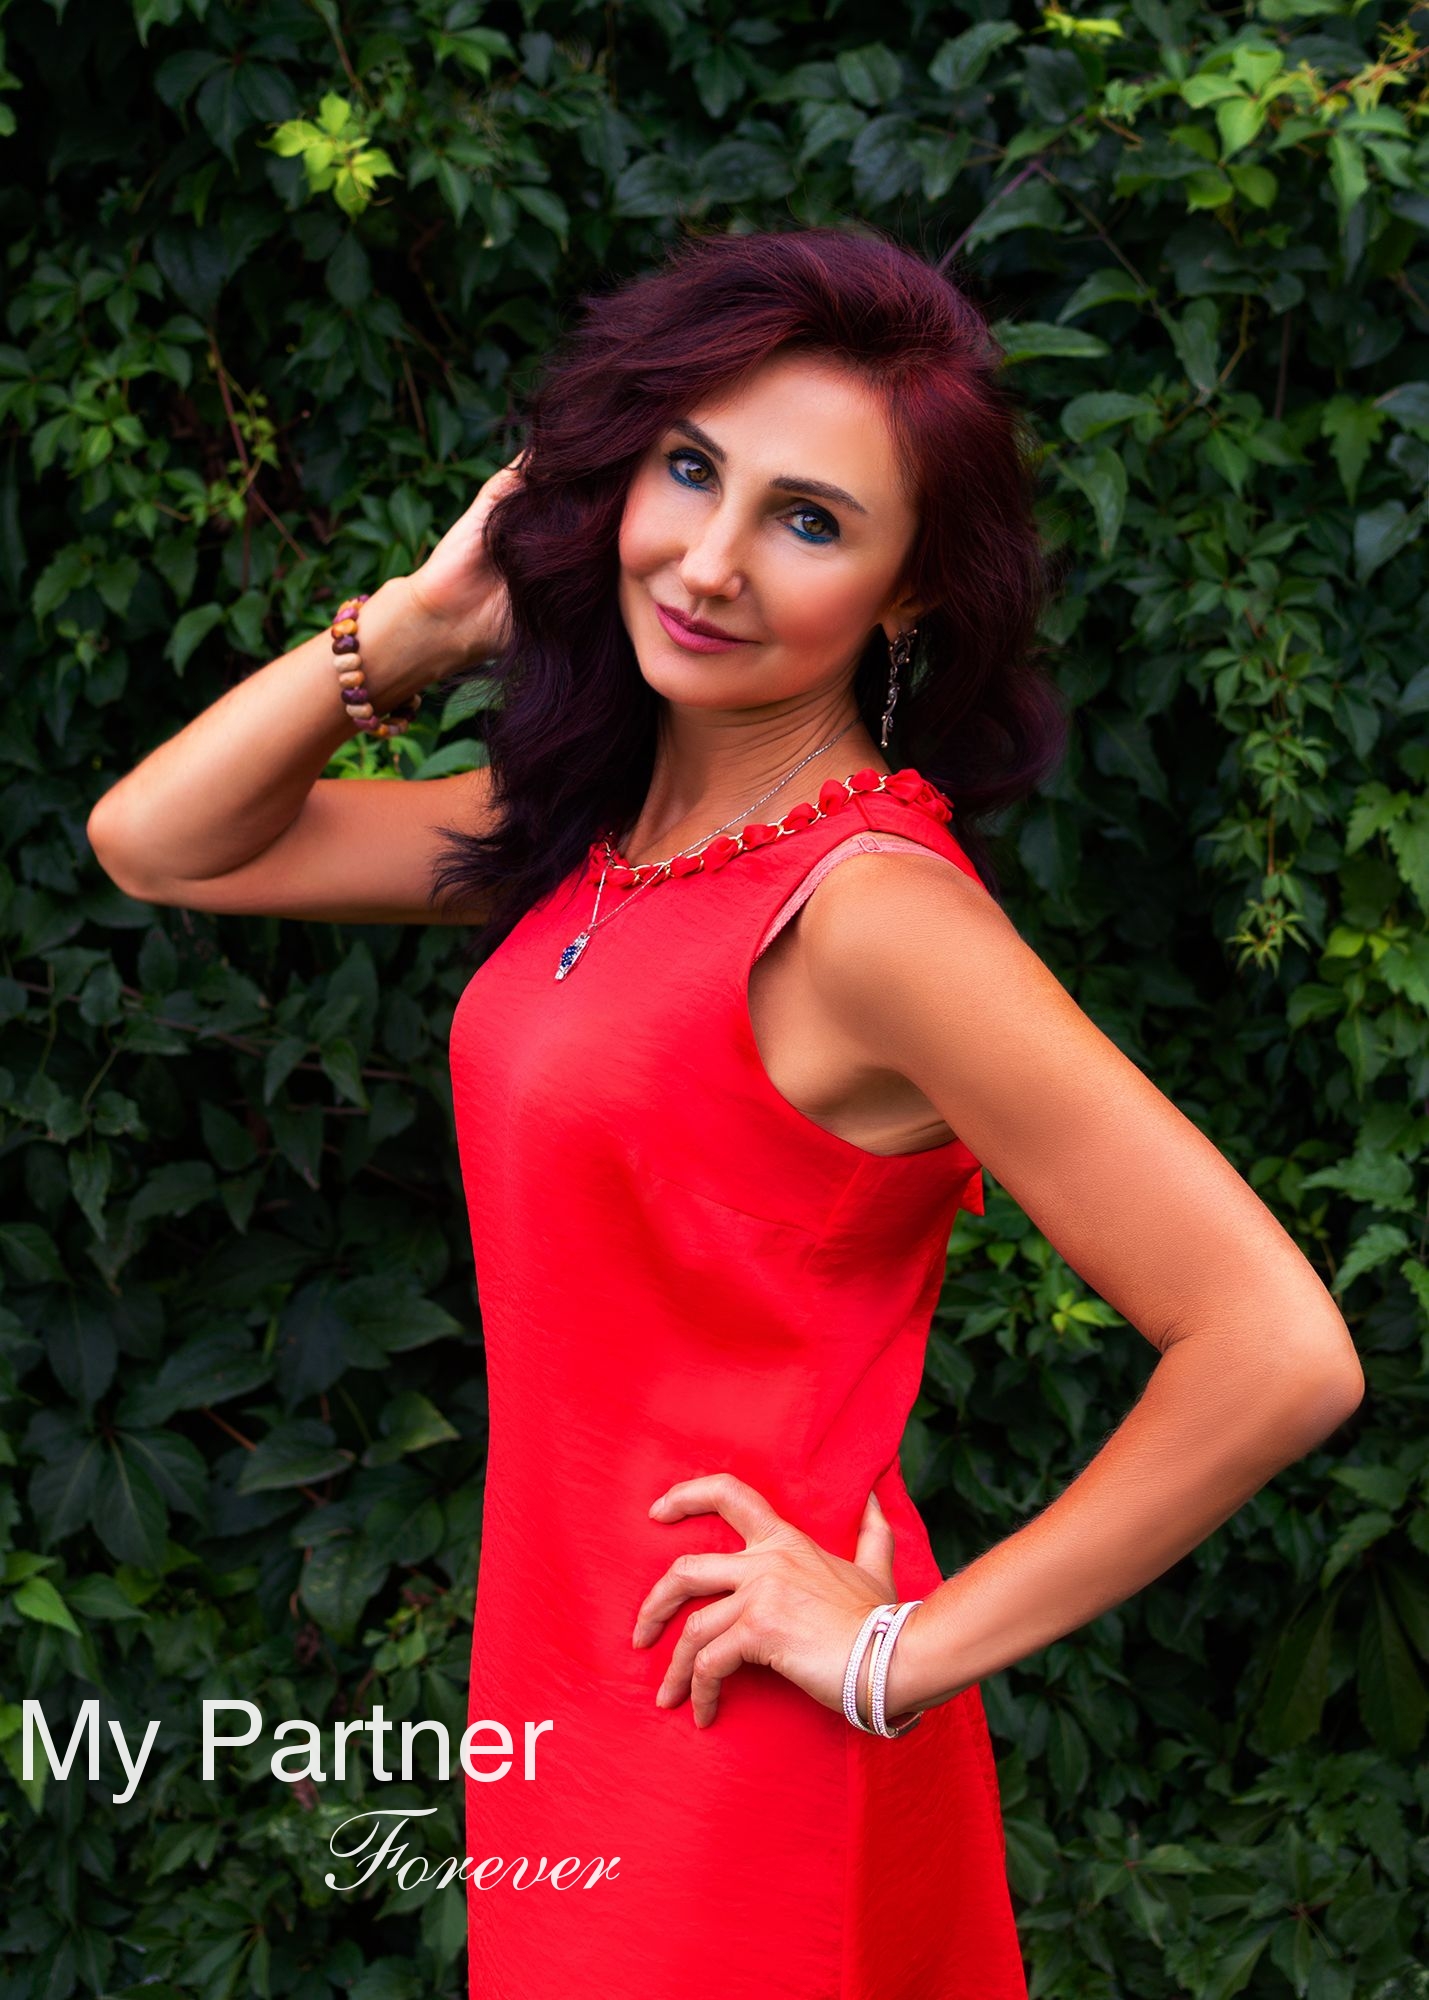 Dating Site to Meet Stunning Ukrainian Girl Valentina from Kiev, Ukraine